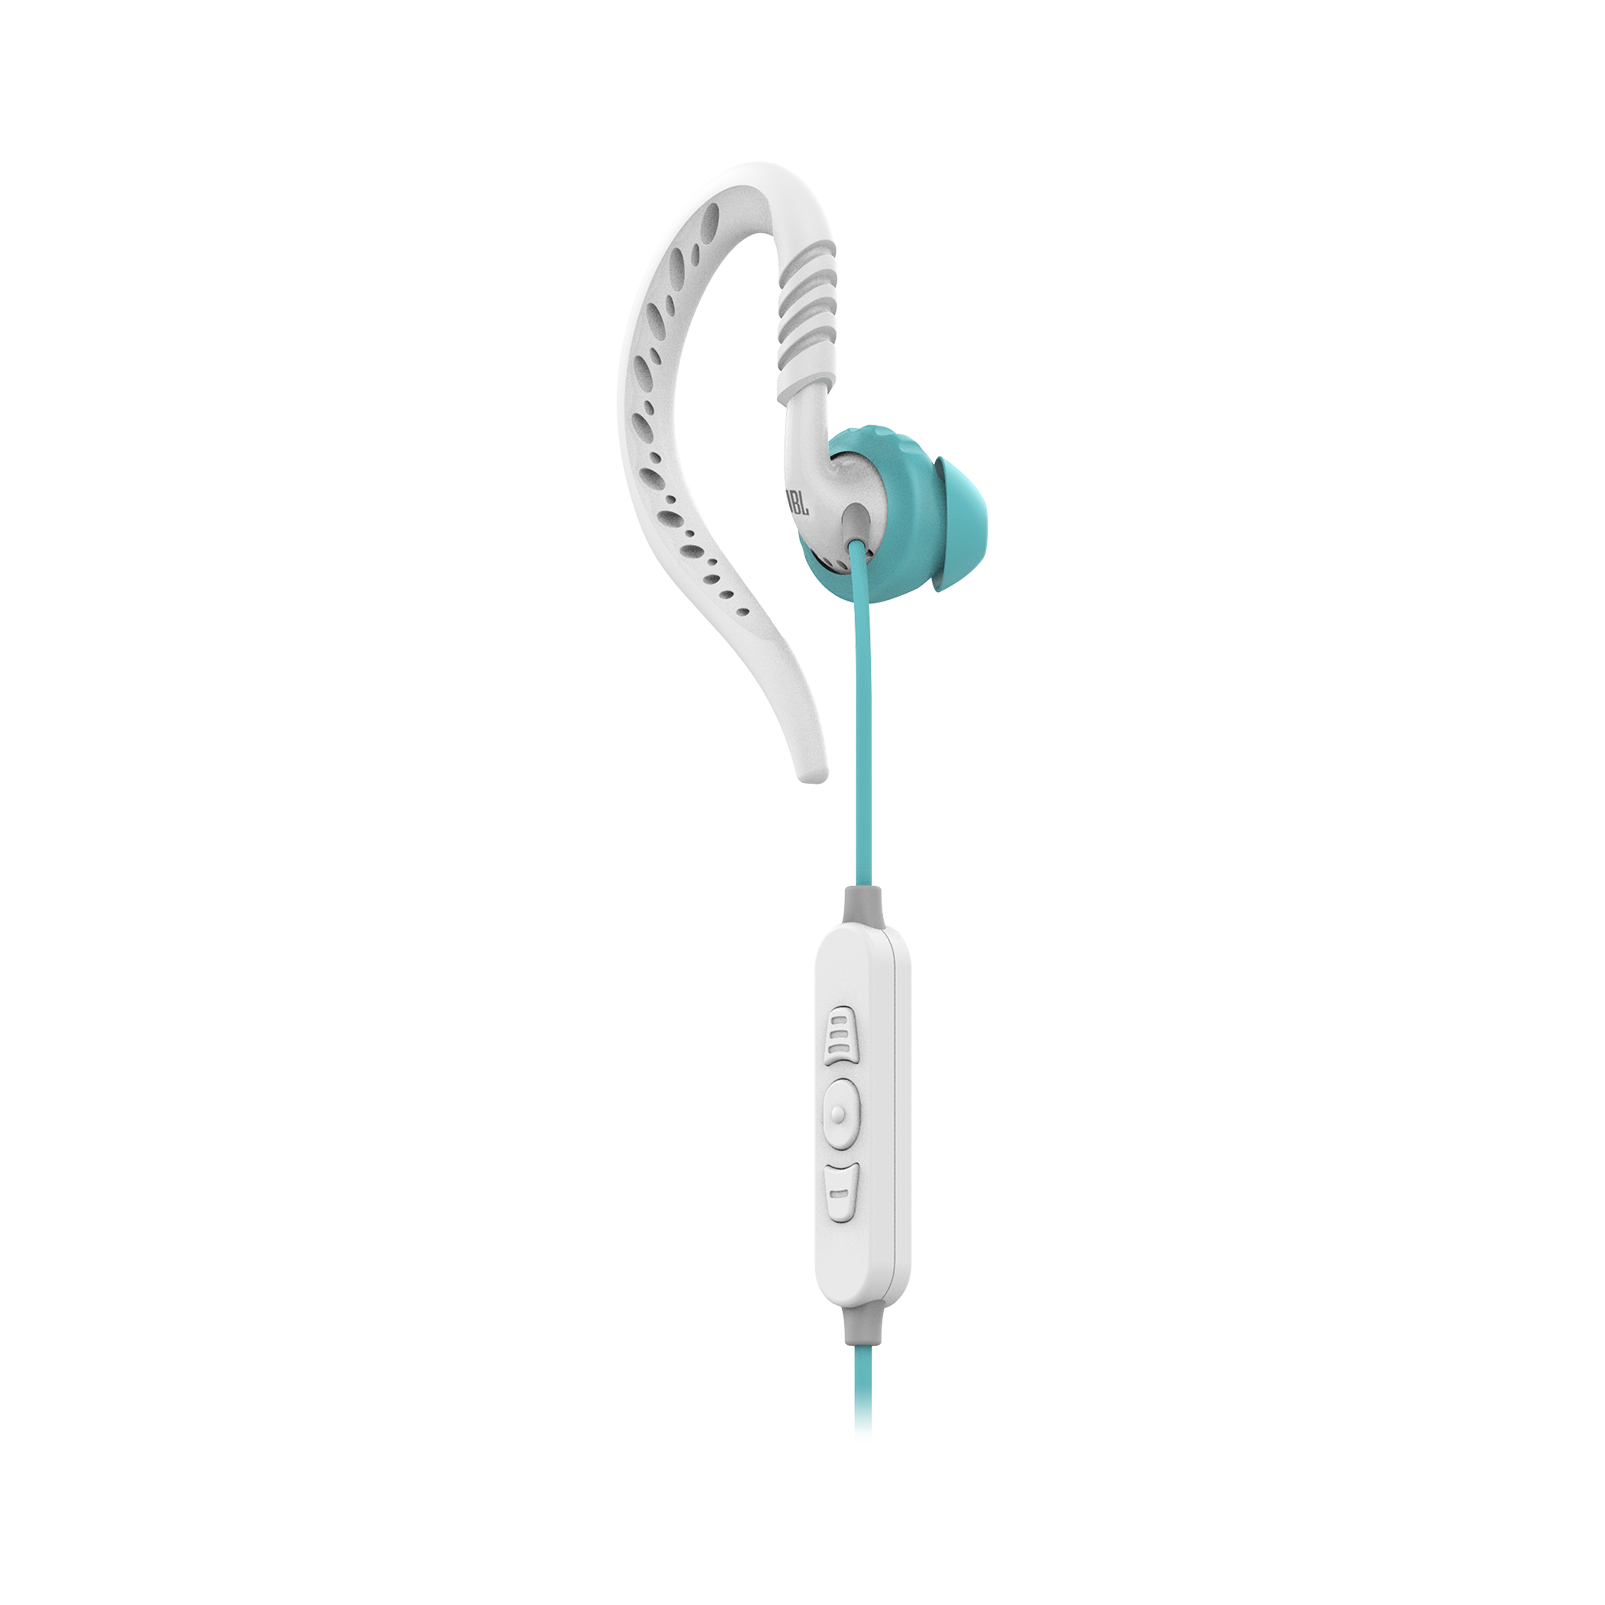 JBL Focus 700 for Women - Aqua - In-Ear Wireless Sport Headphones with charging case - Detailshot 1